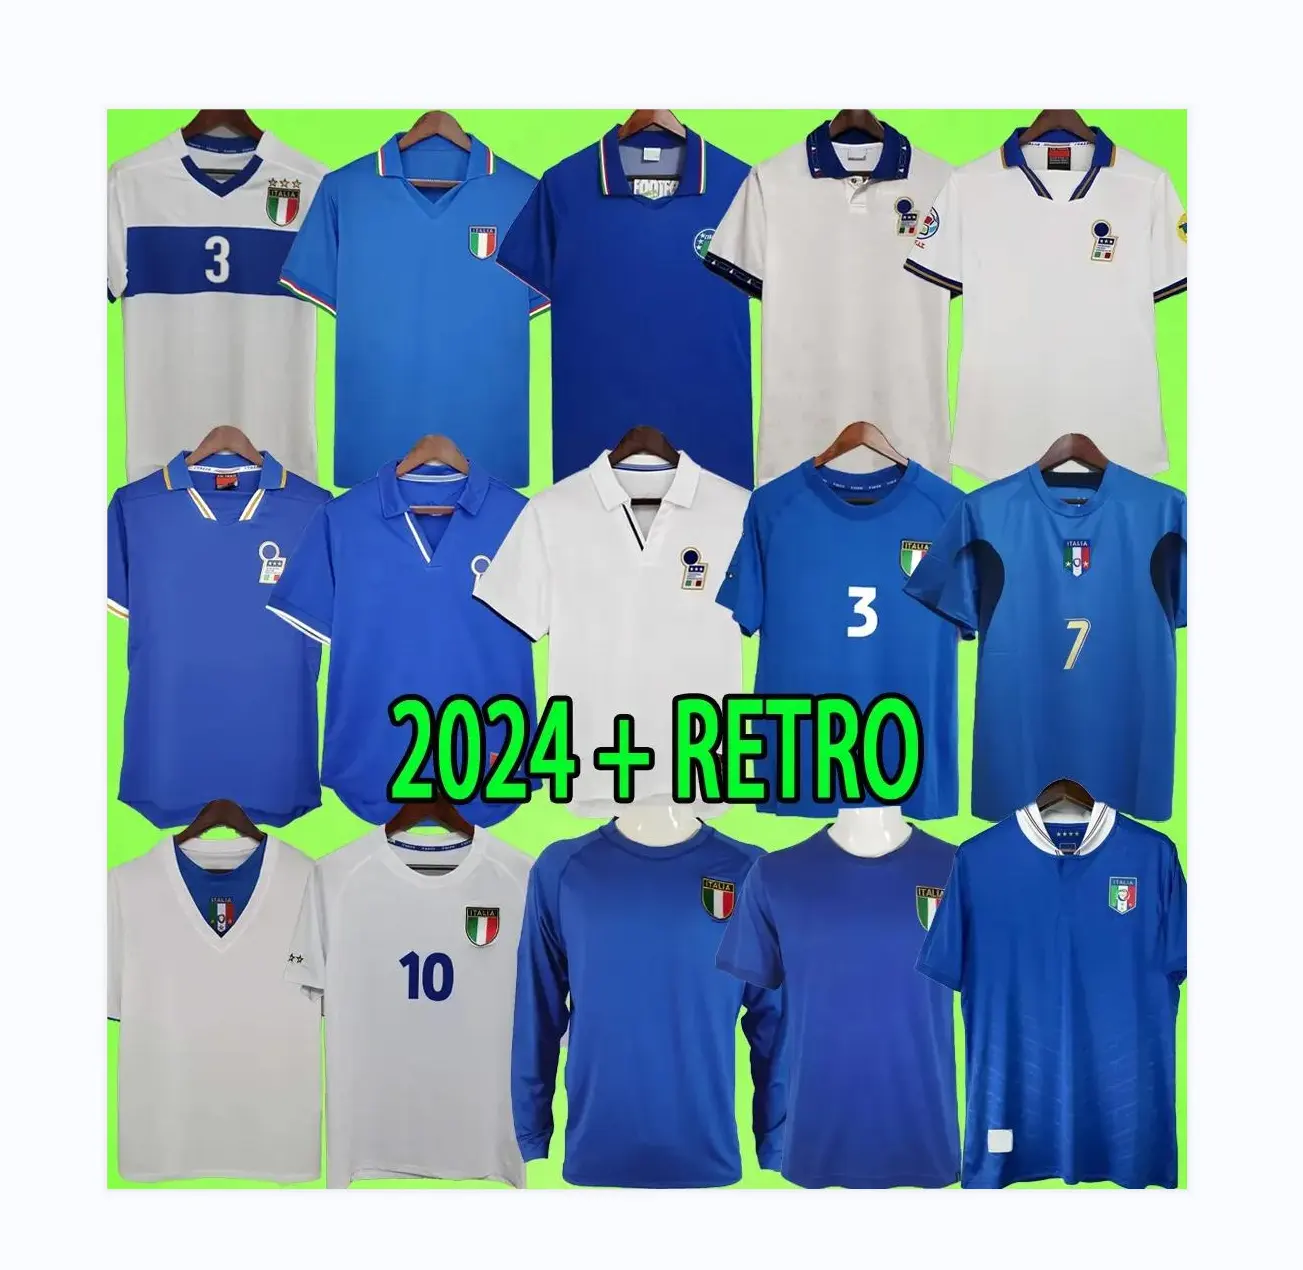 Maillots de football rétro Italie 1979 1982 1988 1990 1994 1996 1998 2000 2002 2004 2006 2012 maillot de football italia uniforme Mens kit